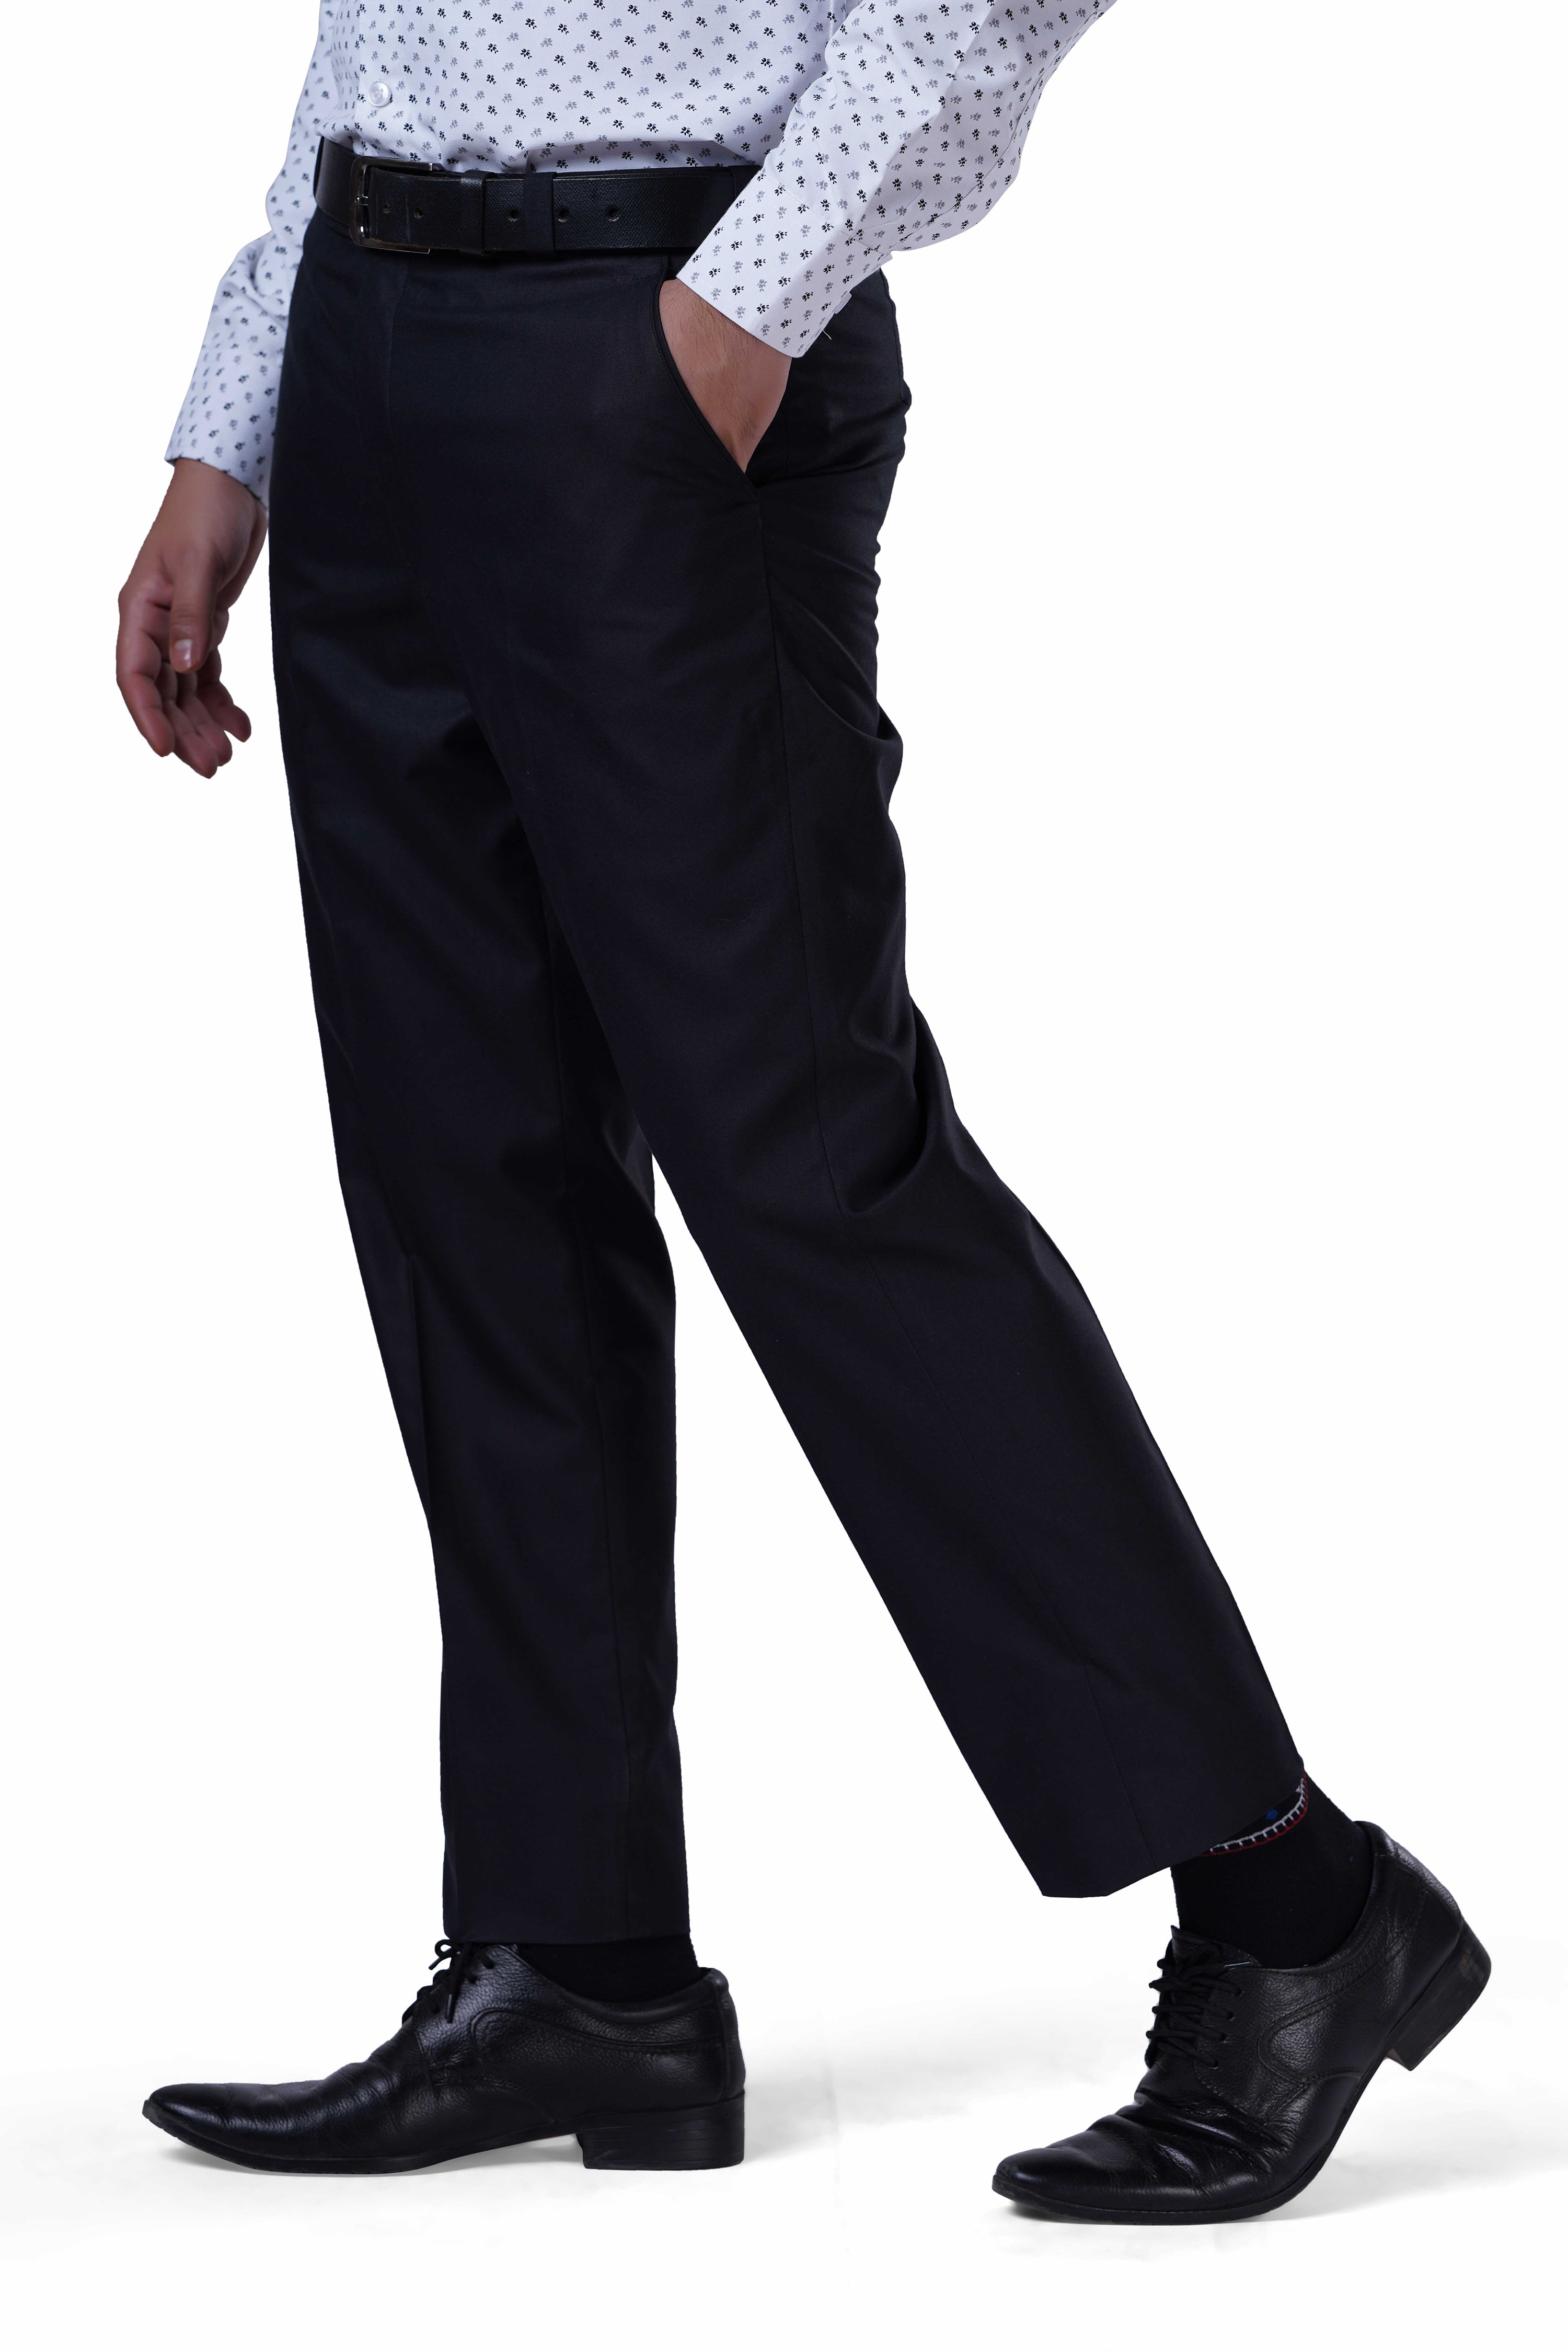 Buy Aswad Men's Wrinkle Free Pants for Men | Self Design Formal Regular Fit  Trousers (28, Gloss Pink) at Amazon.in